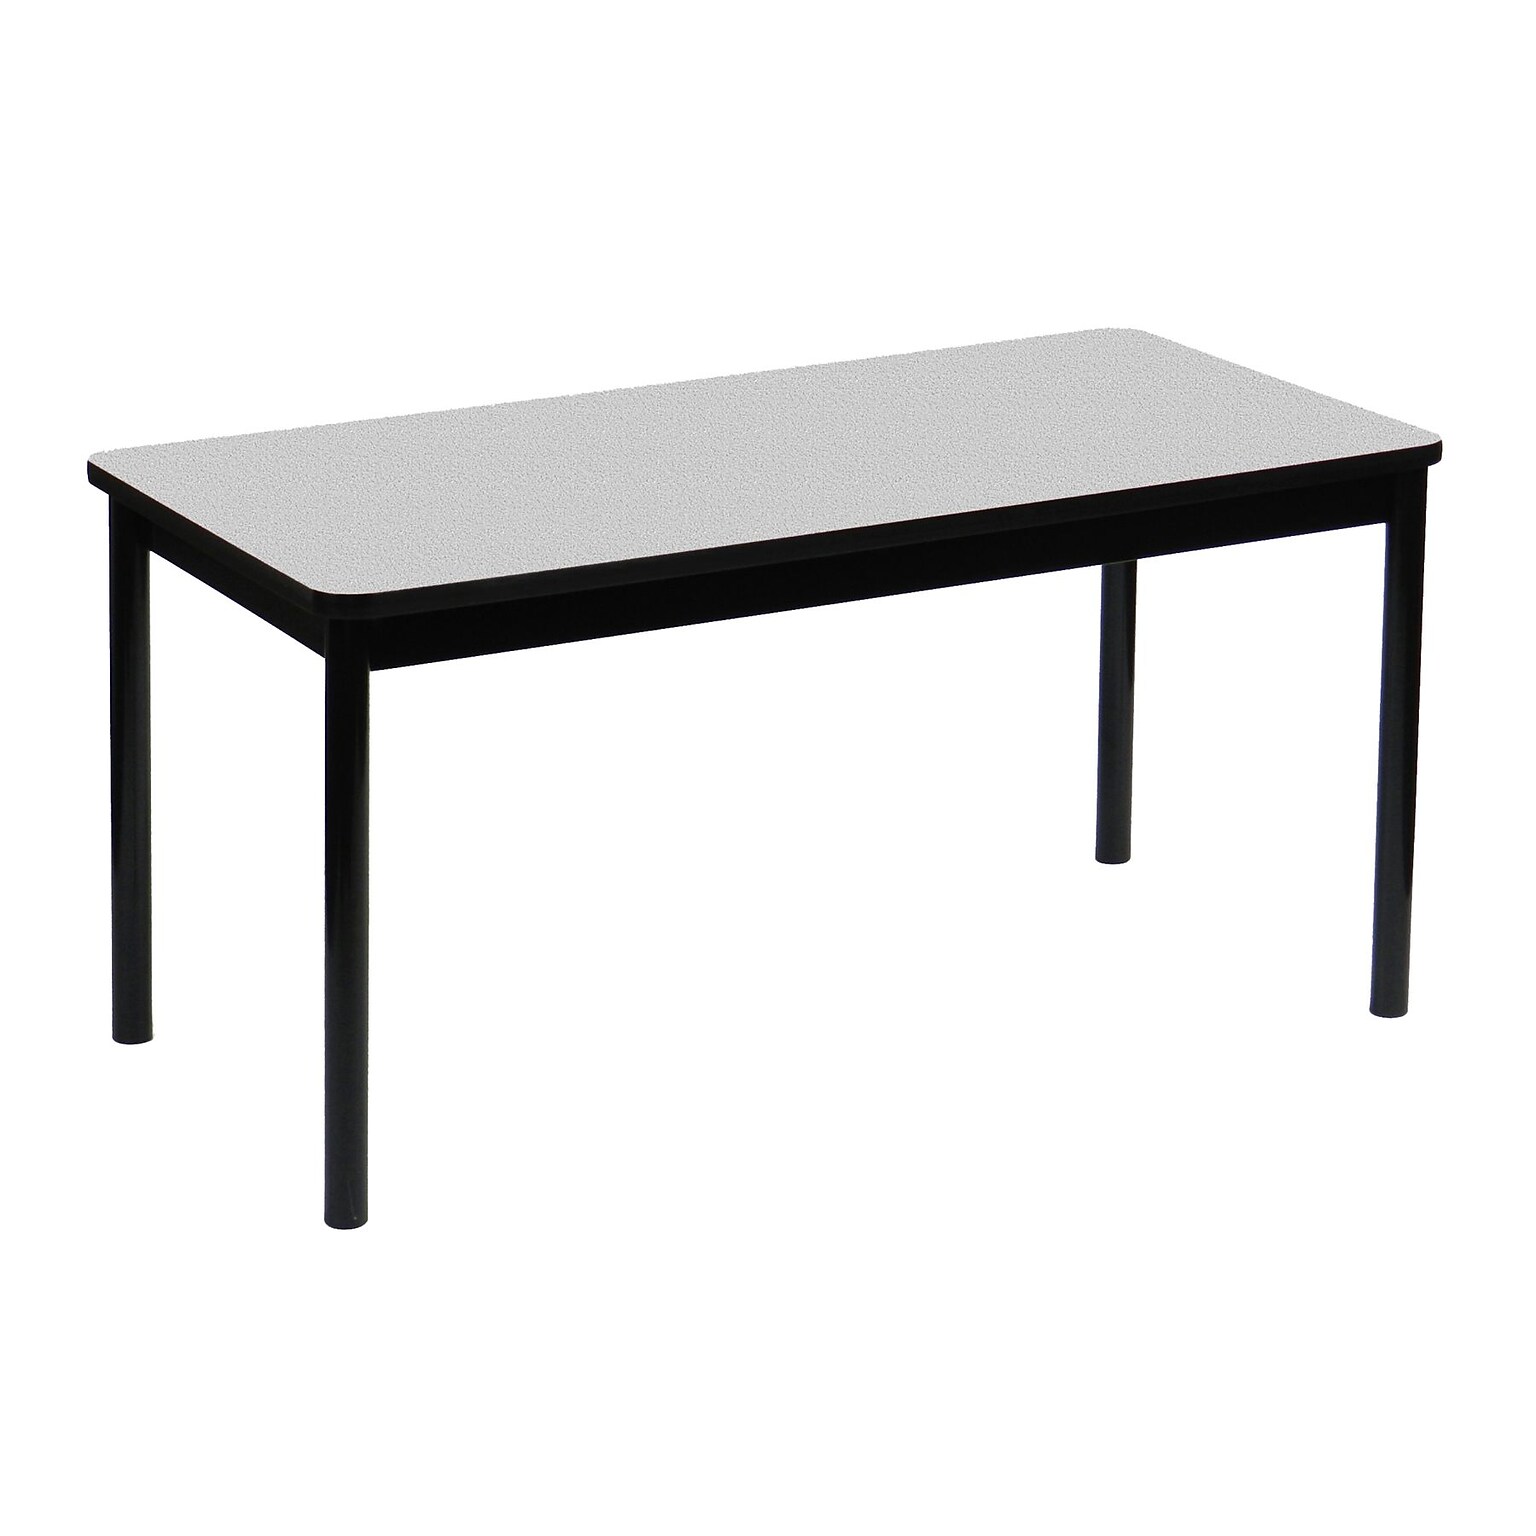 Correll 60 Rectangular Training Table, Gray Granite (LR2460-15)